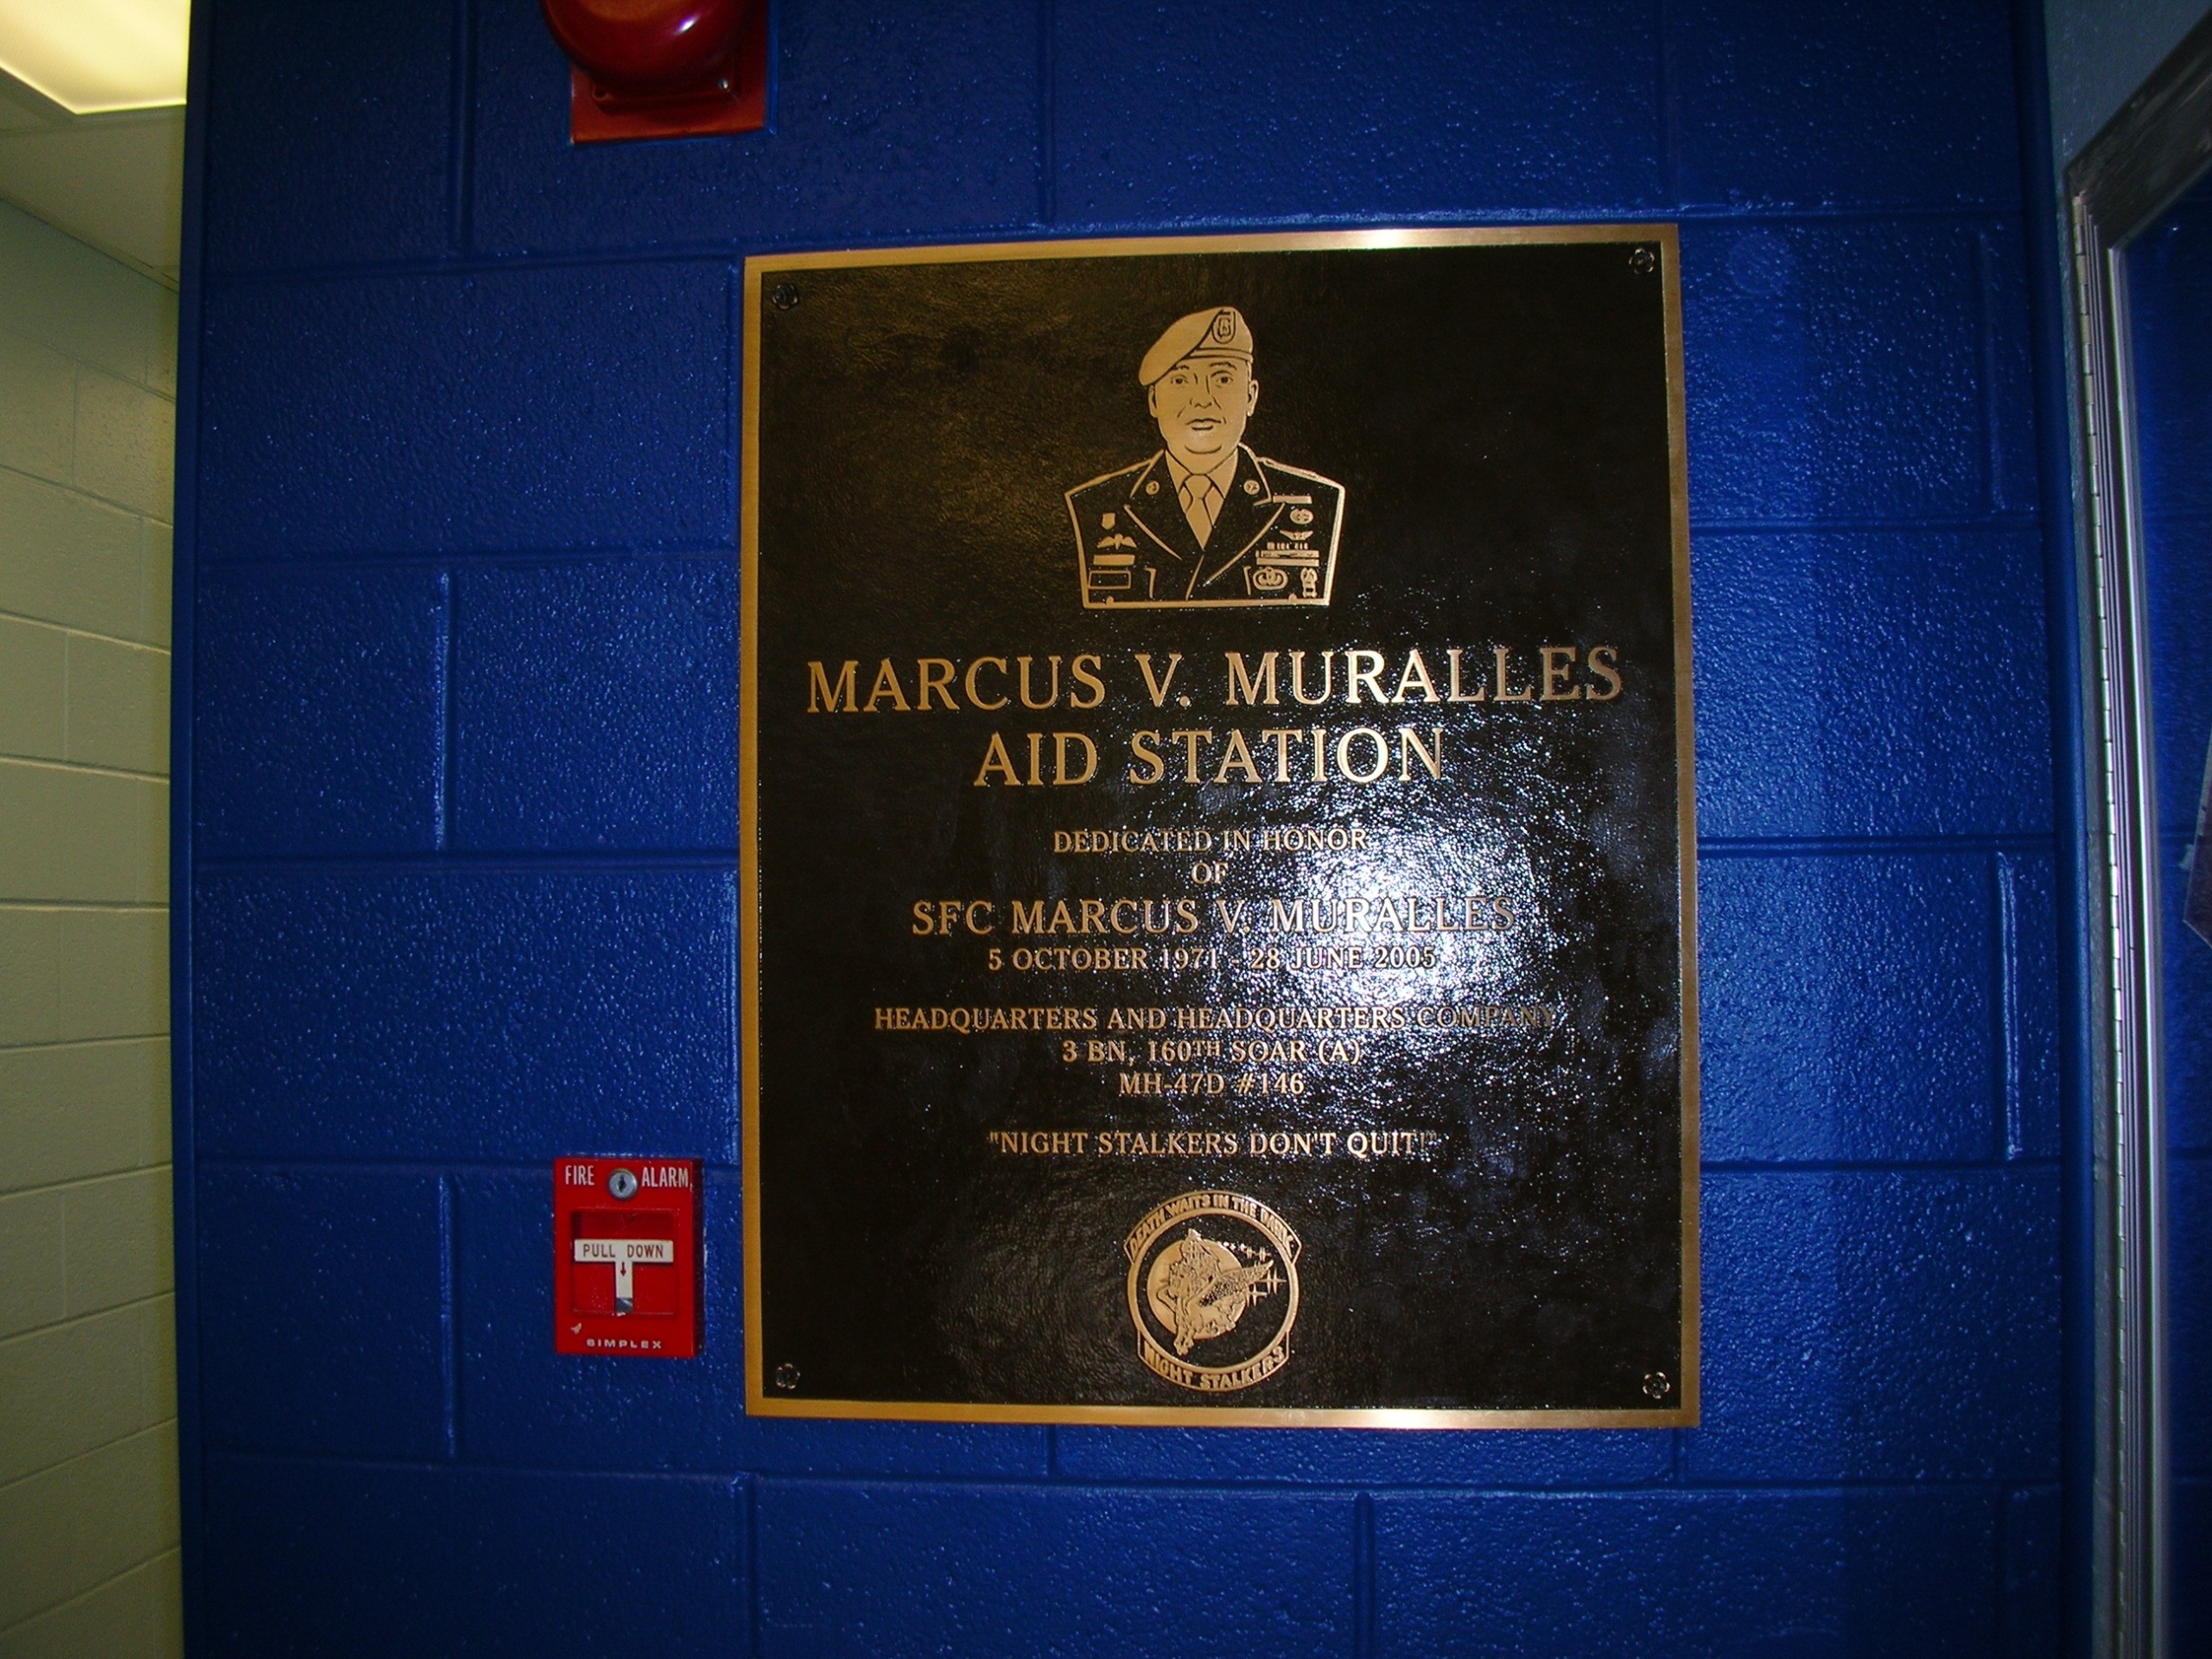 mvmuralles-aid-station-dedication-photo-05